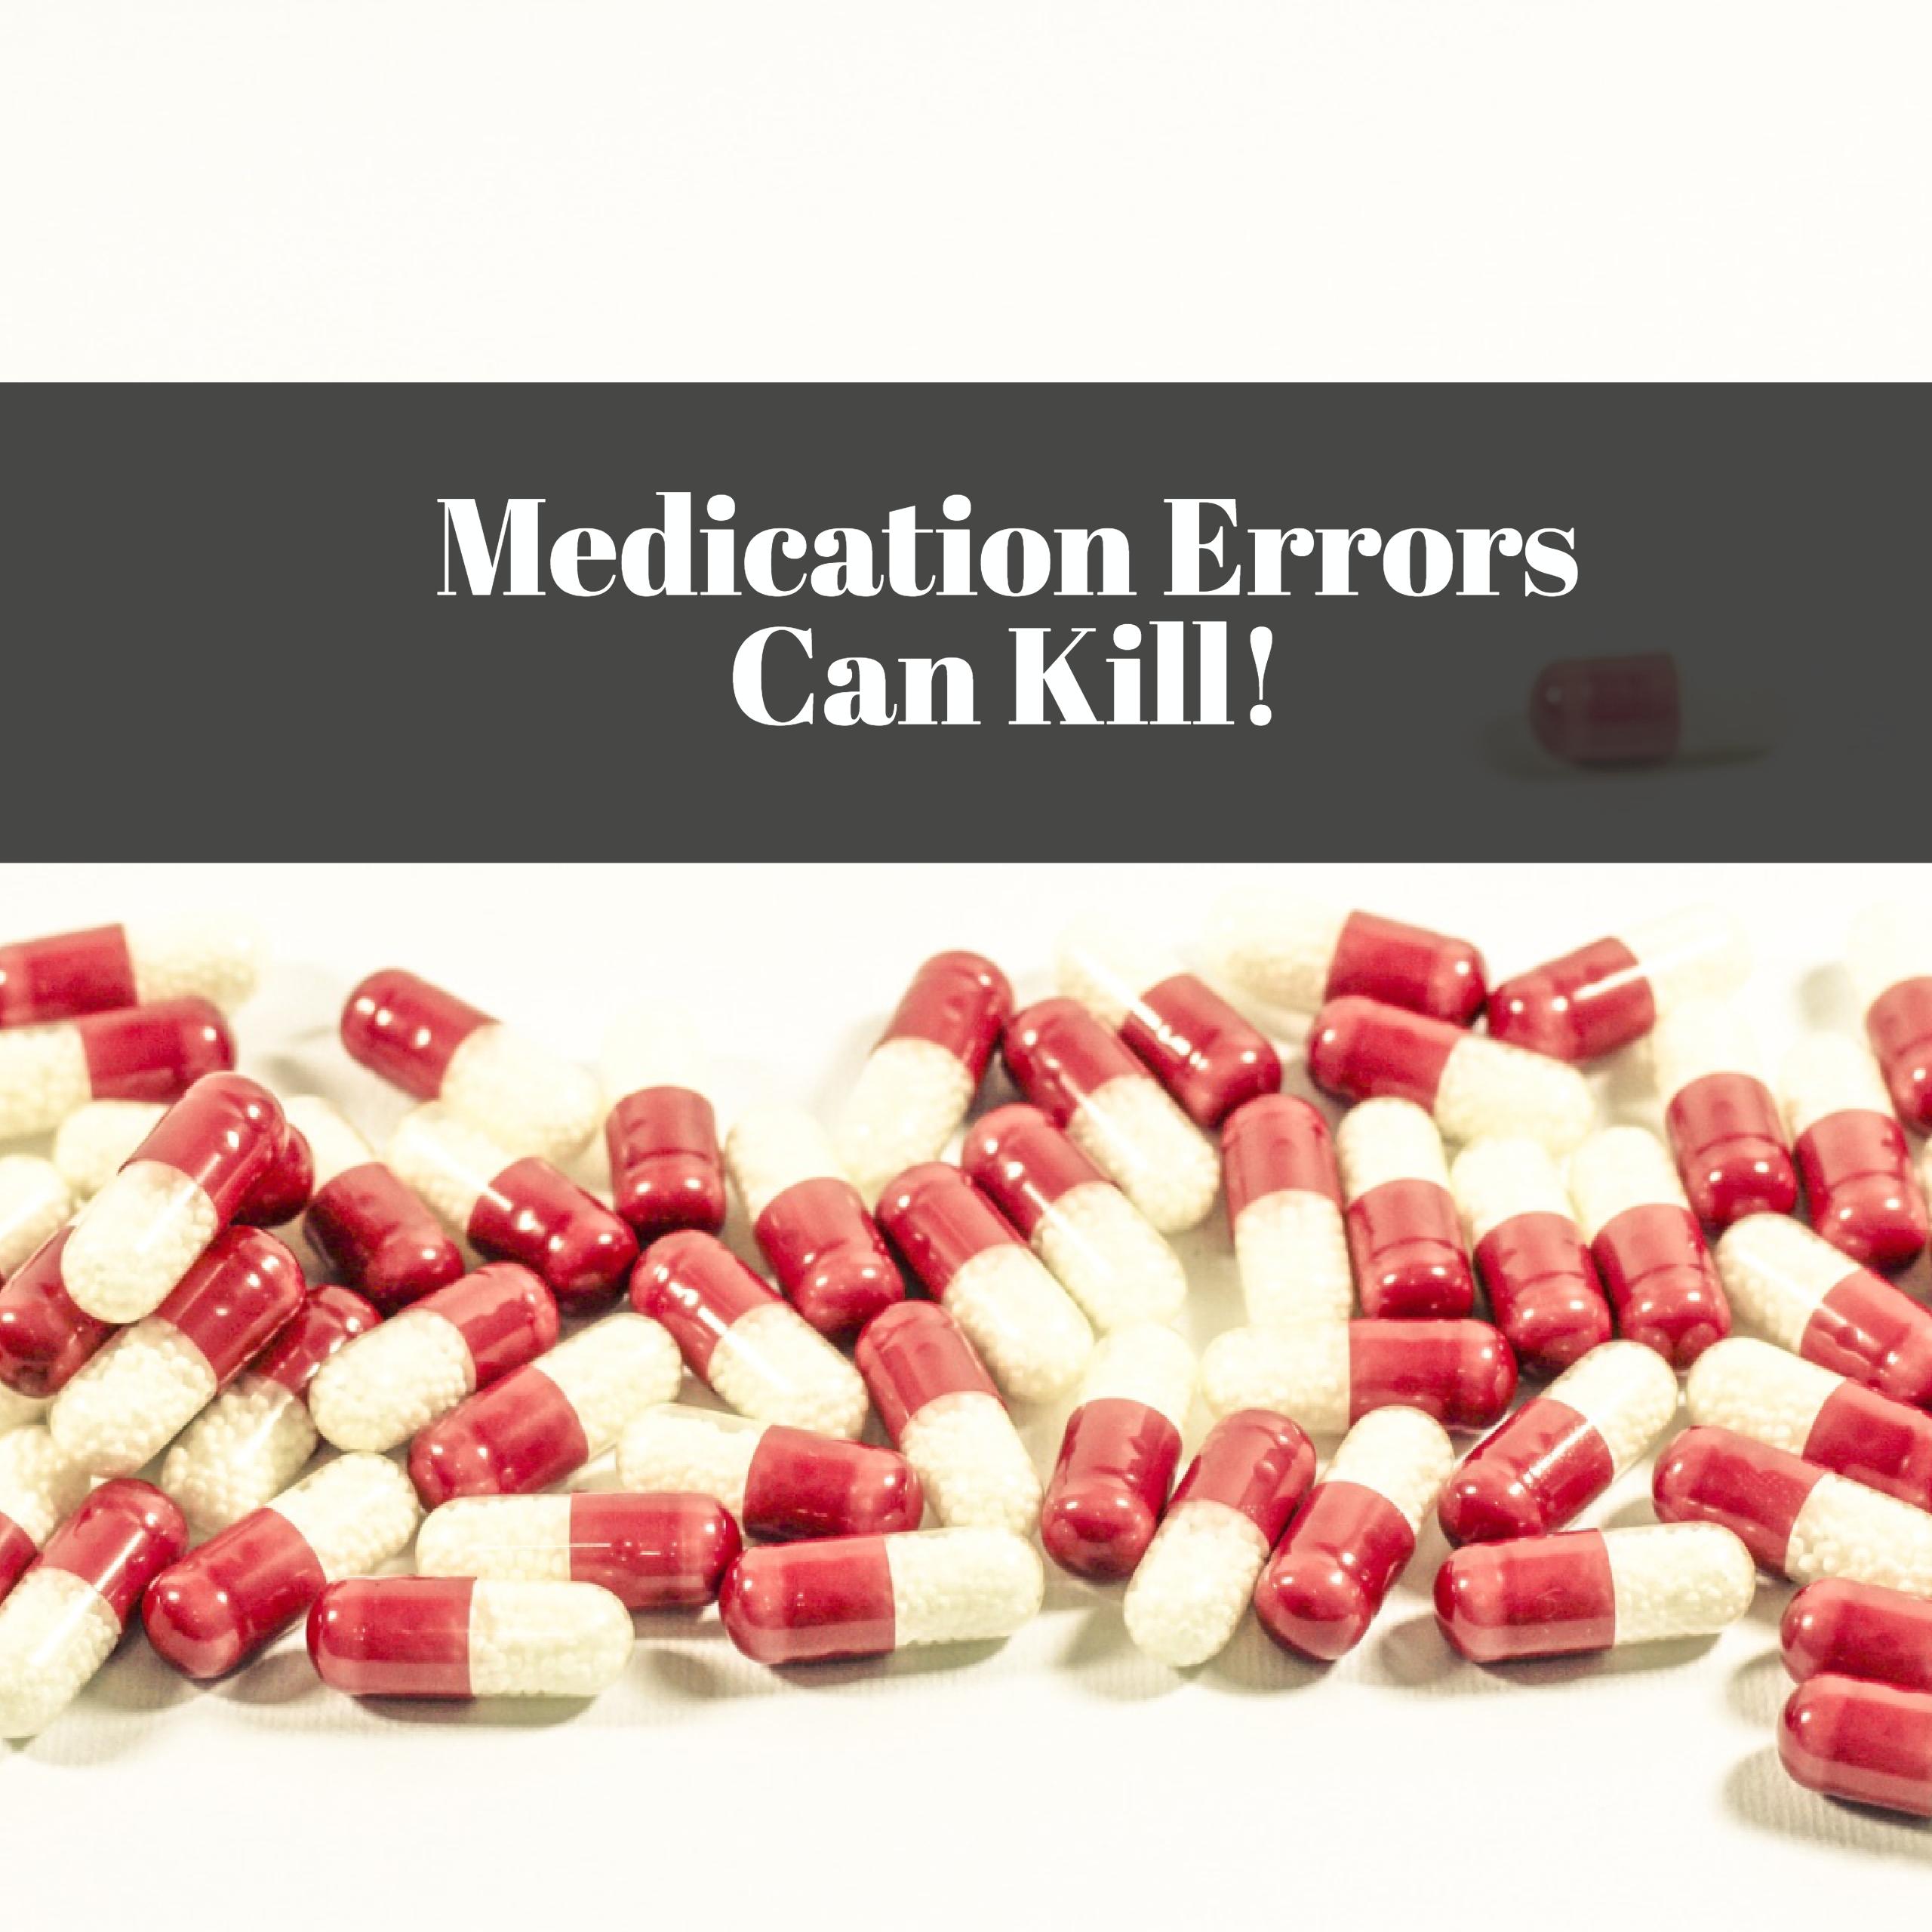 Boca Raton Medication Error Lawyer Discusses Common Drug Mistakes